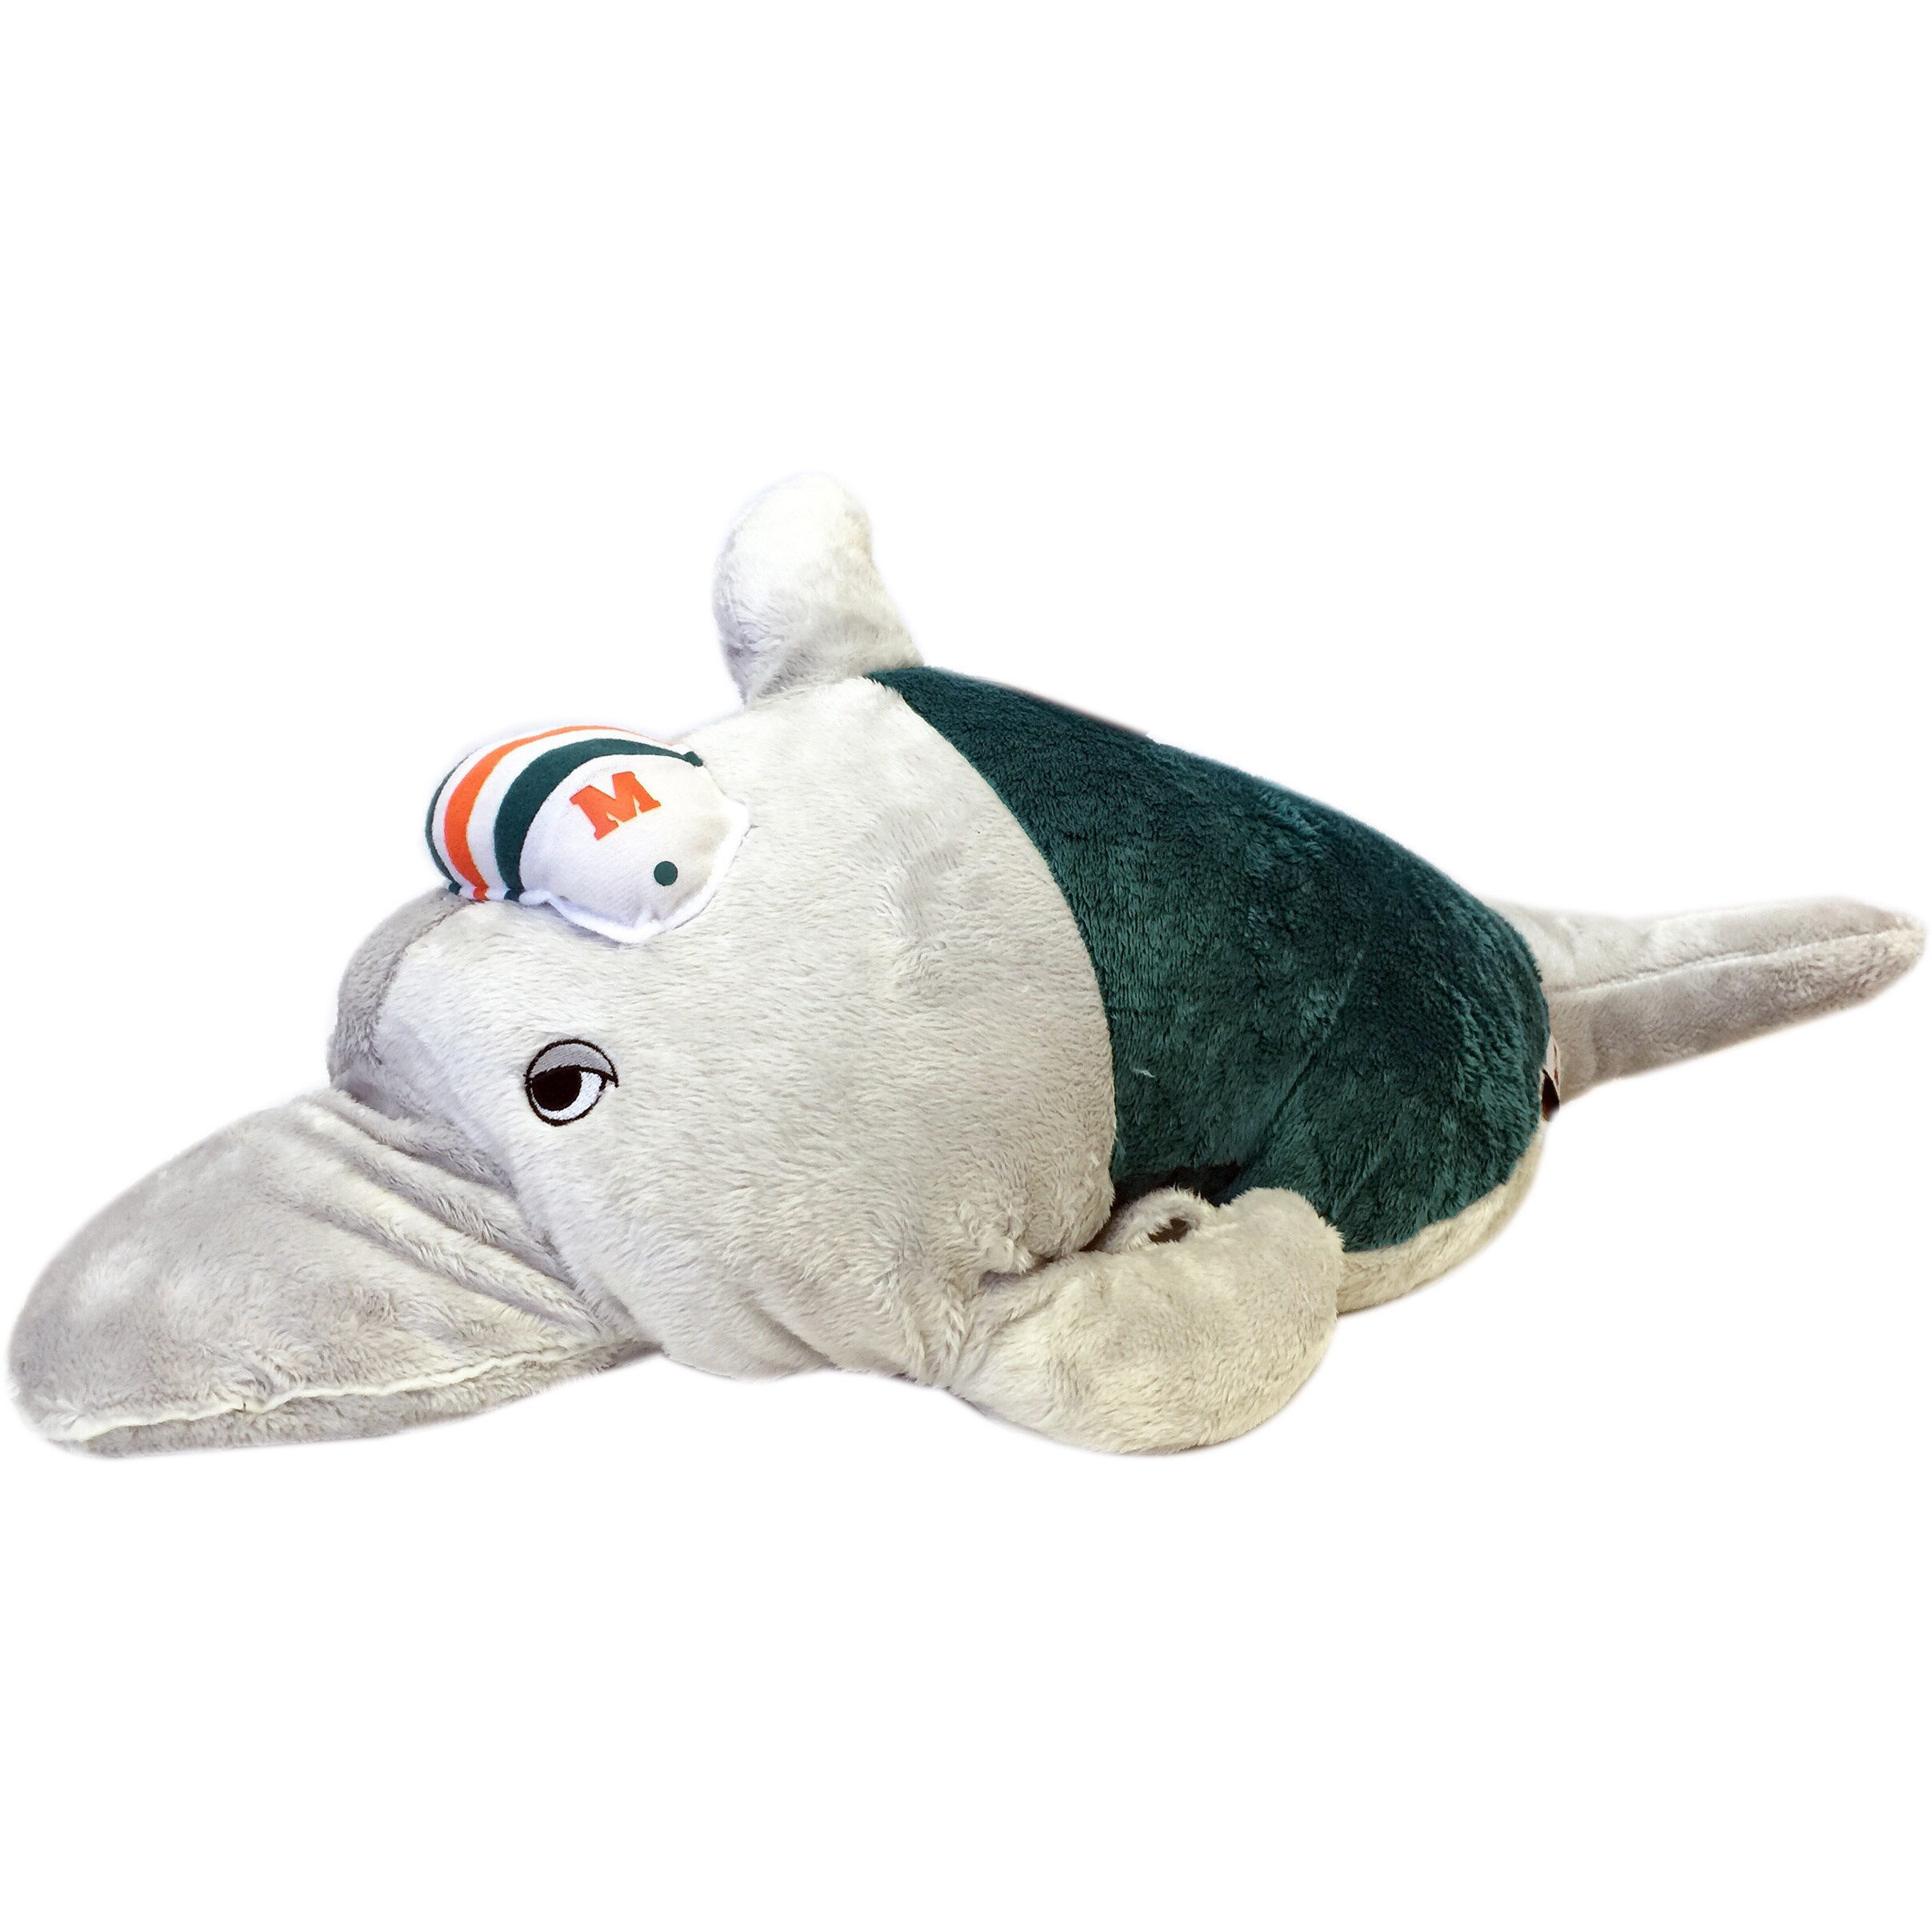 miami dolphin stuffed animal